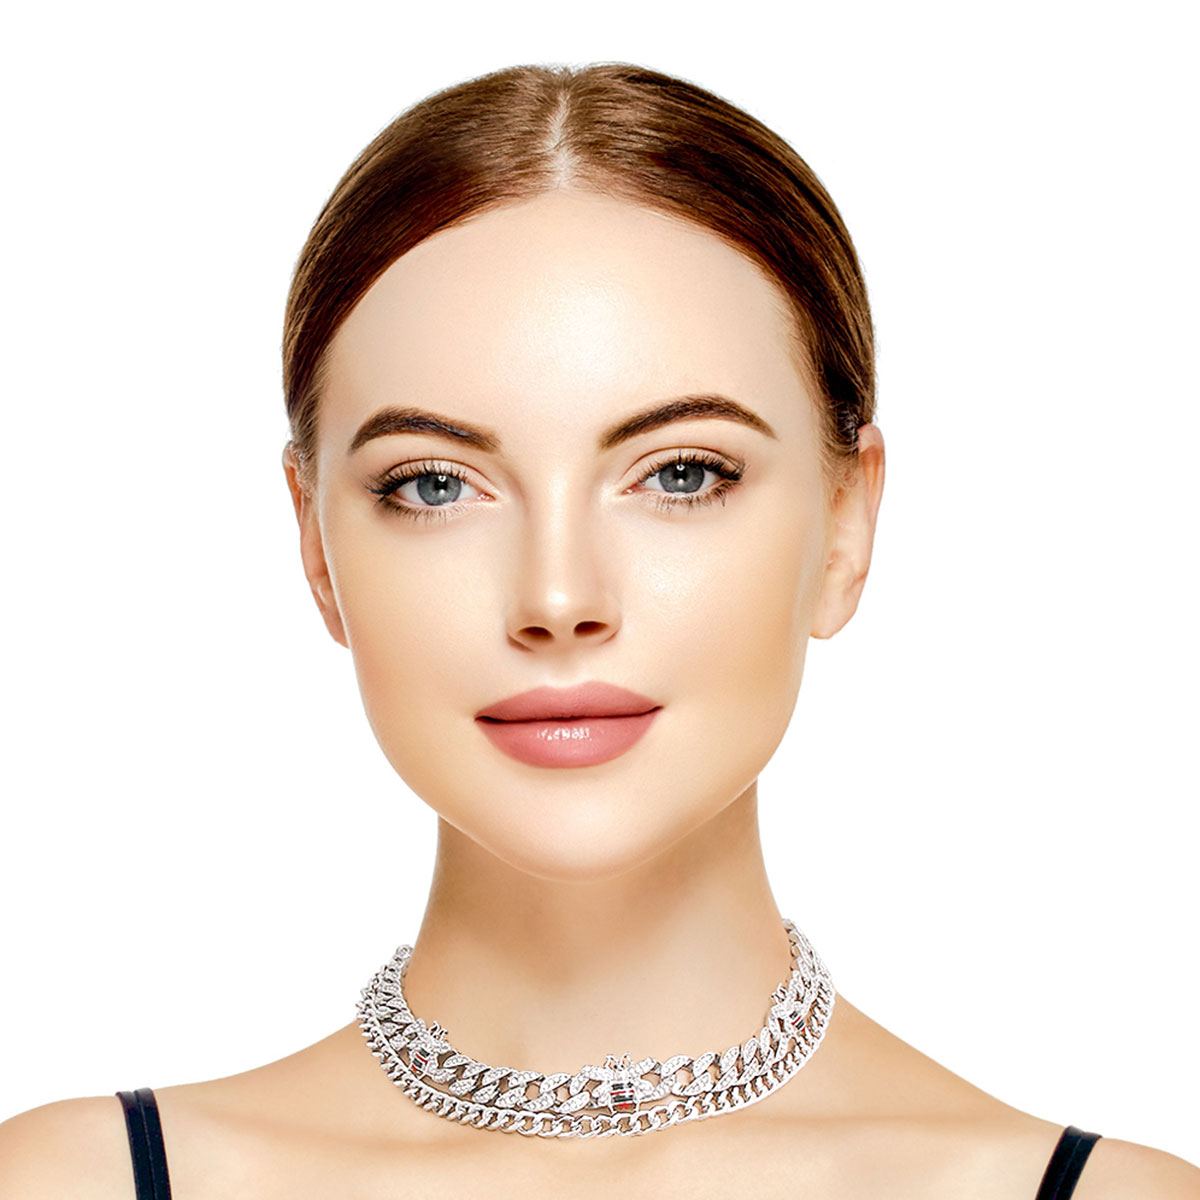 Designer Silver Double Chain Necklace